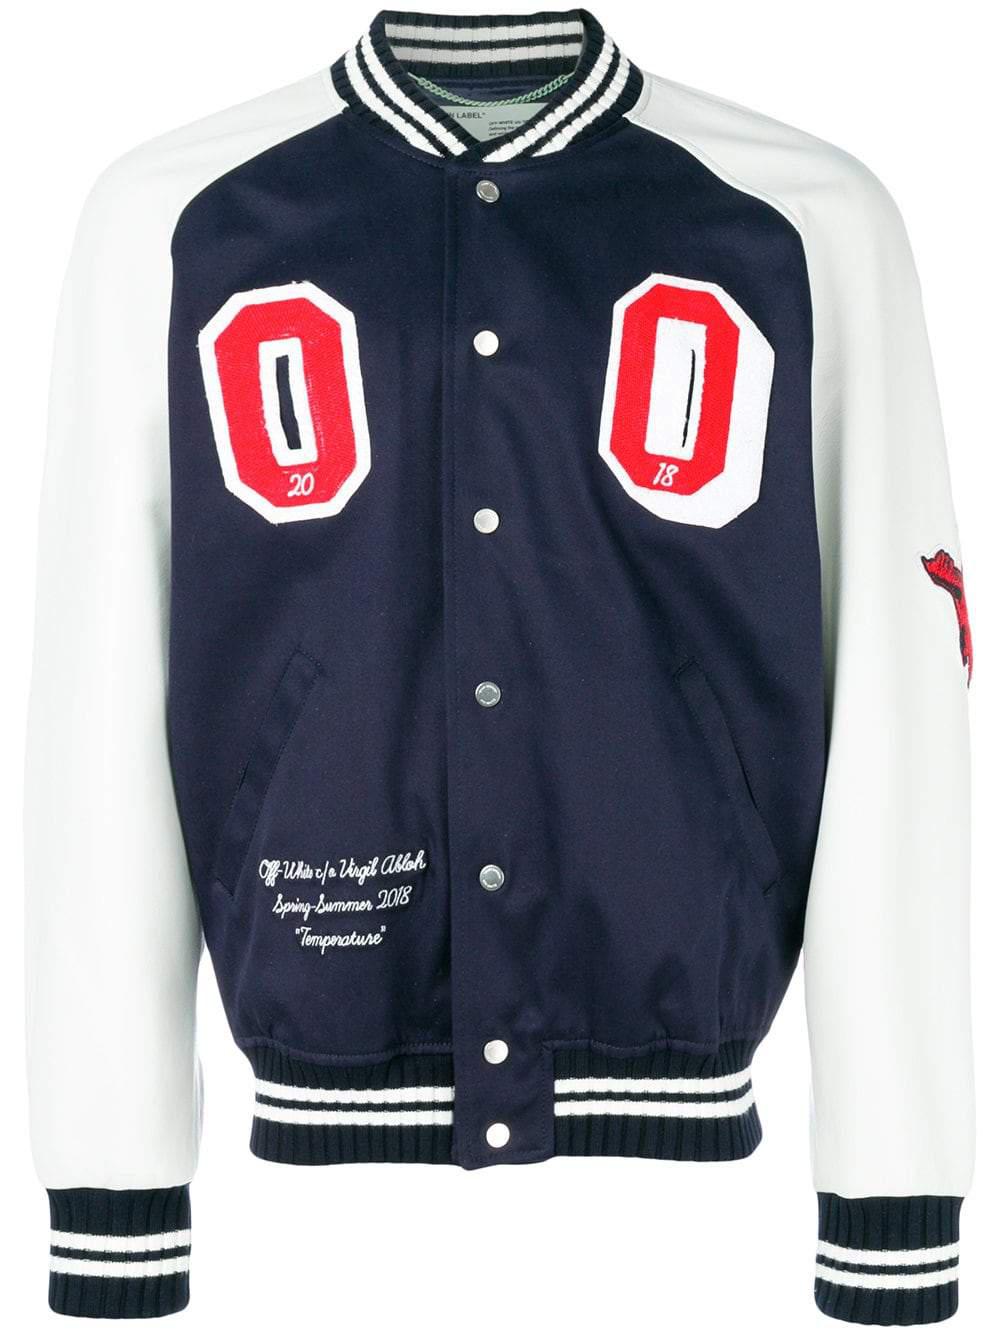 Off-White c/o Virgil Abloh Cotton Varsity Jacket in Blue for Men - Lyst